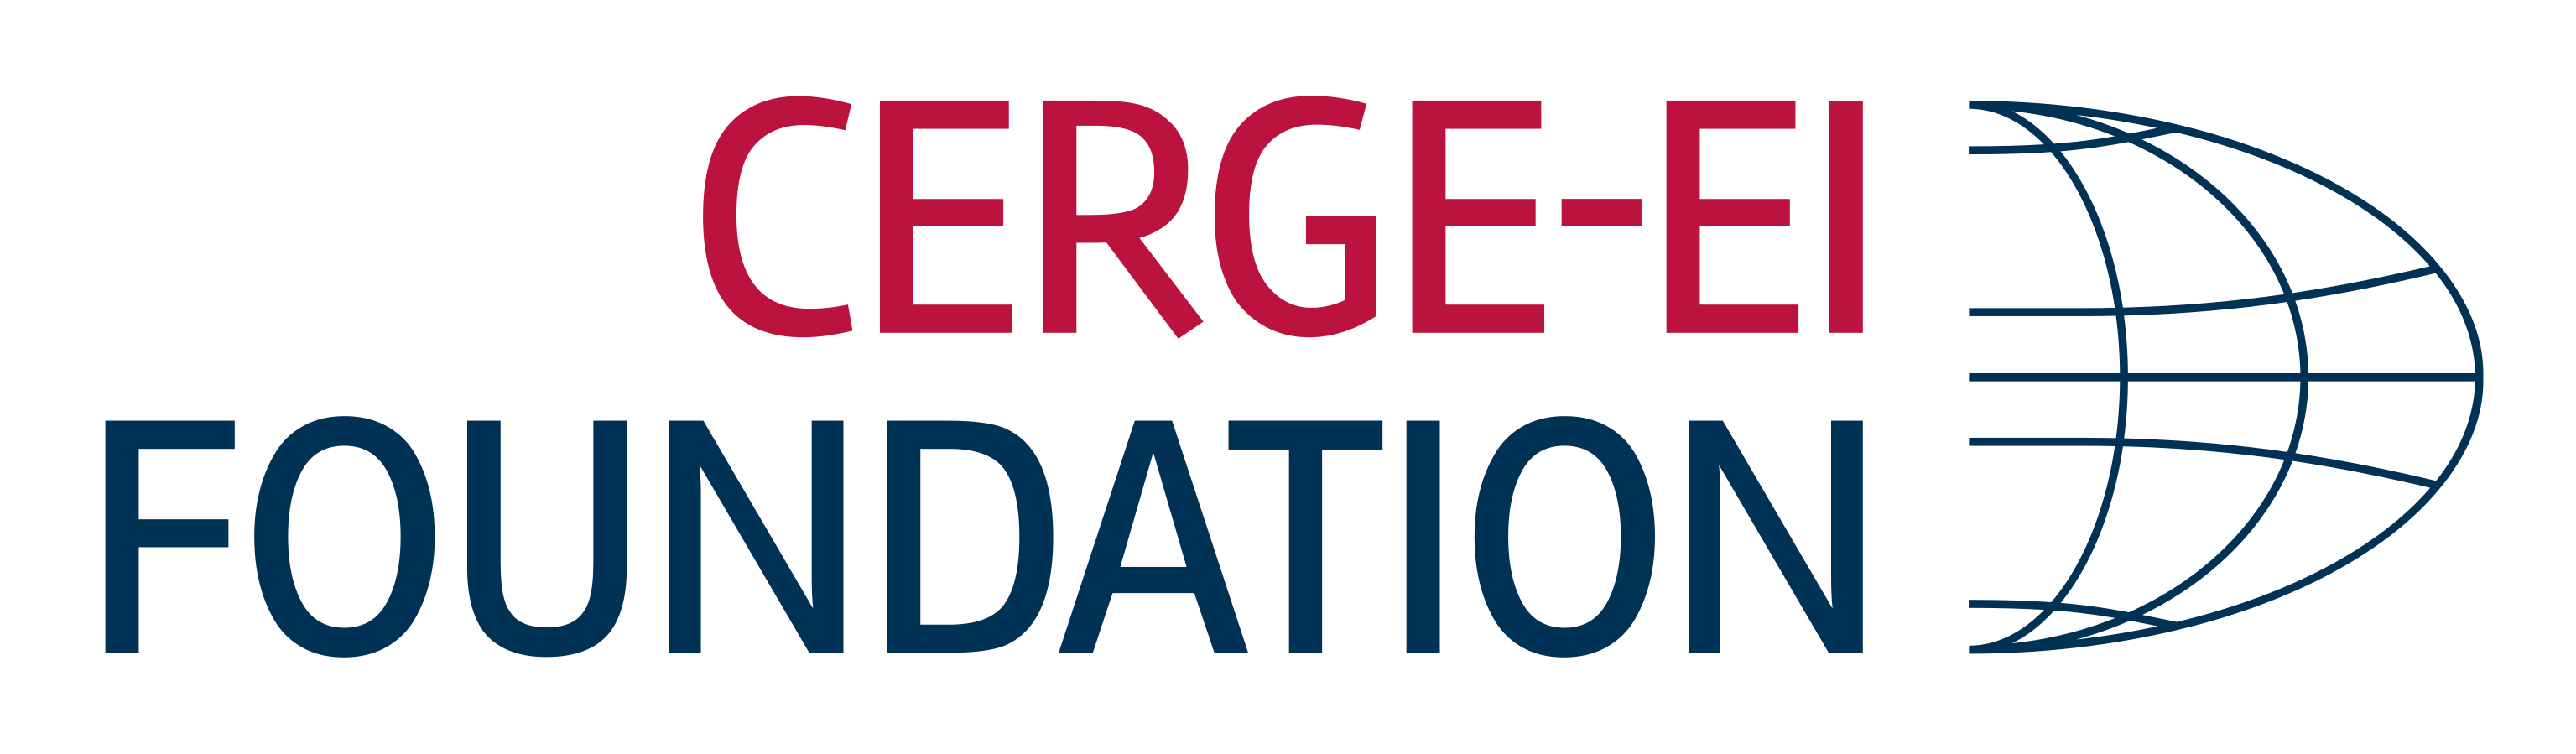 CERGE-EI Foundation Moodle